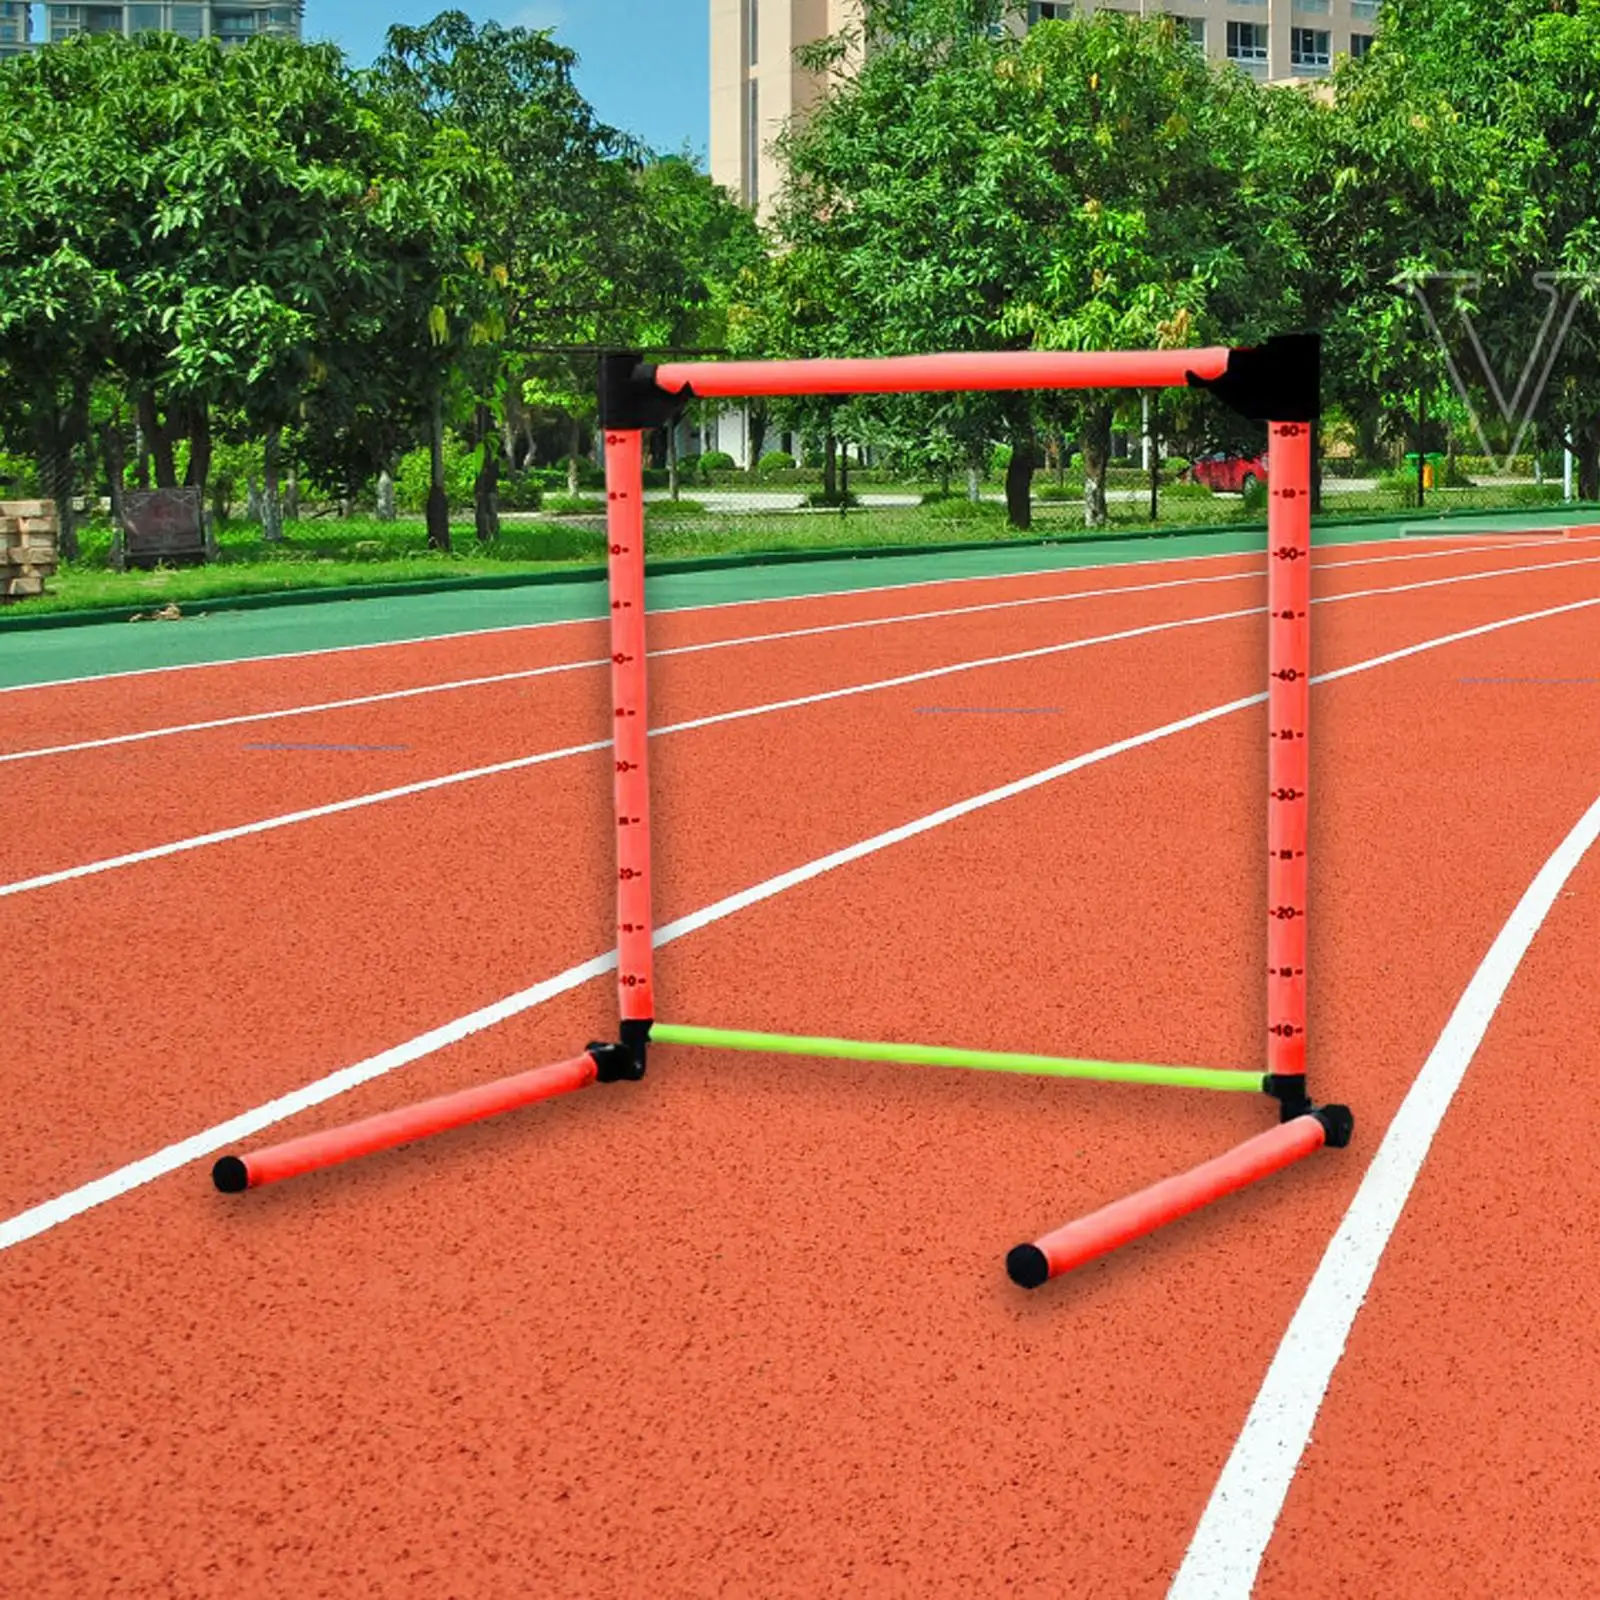 Agility Hurdles Improves Strength Jumping Bar Set Speed Hurdles Adjustable Height for Soccer Athletes Baseball Football Workout